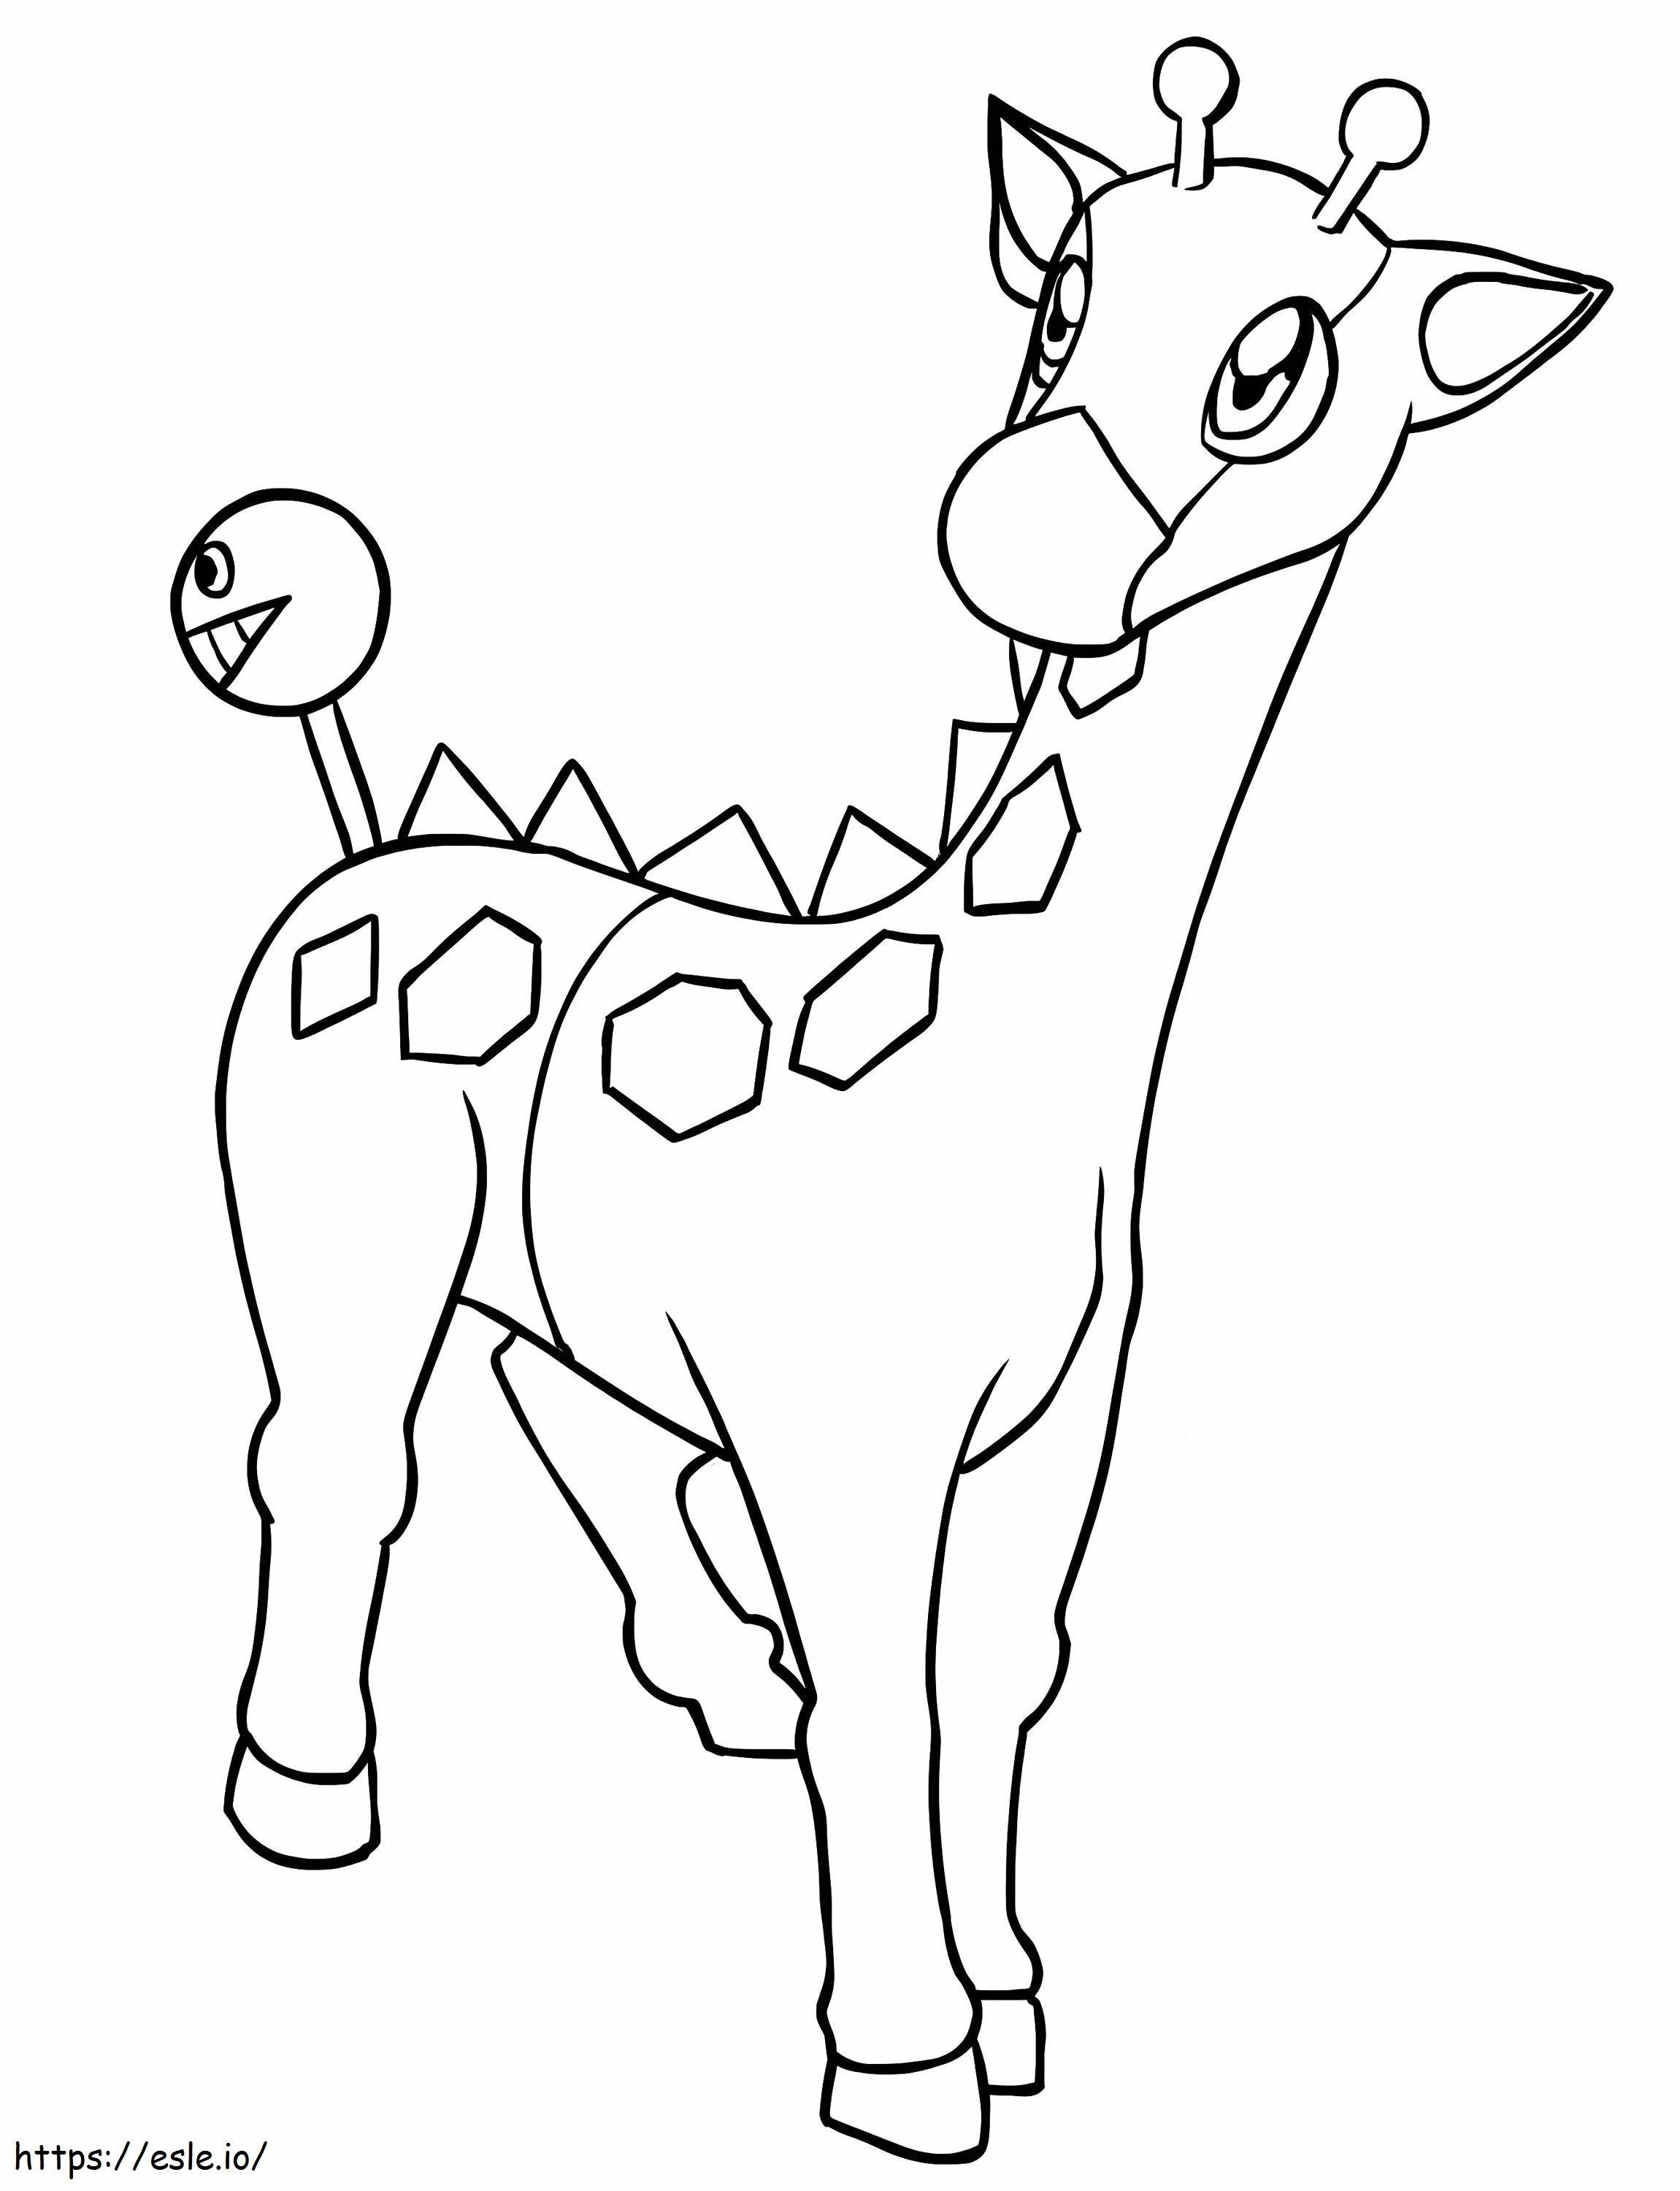 Girafarig Pokemon coloring page